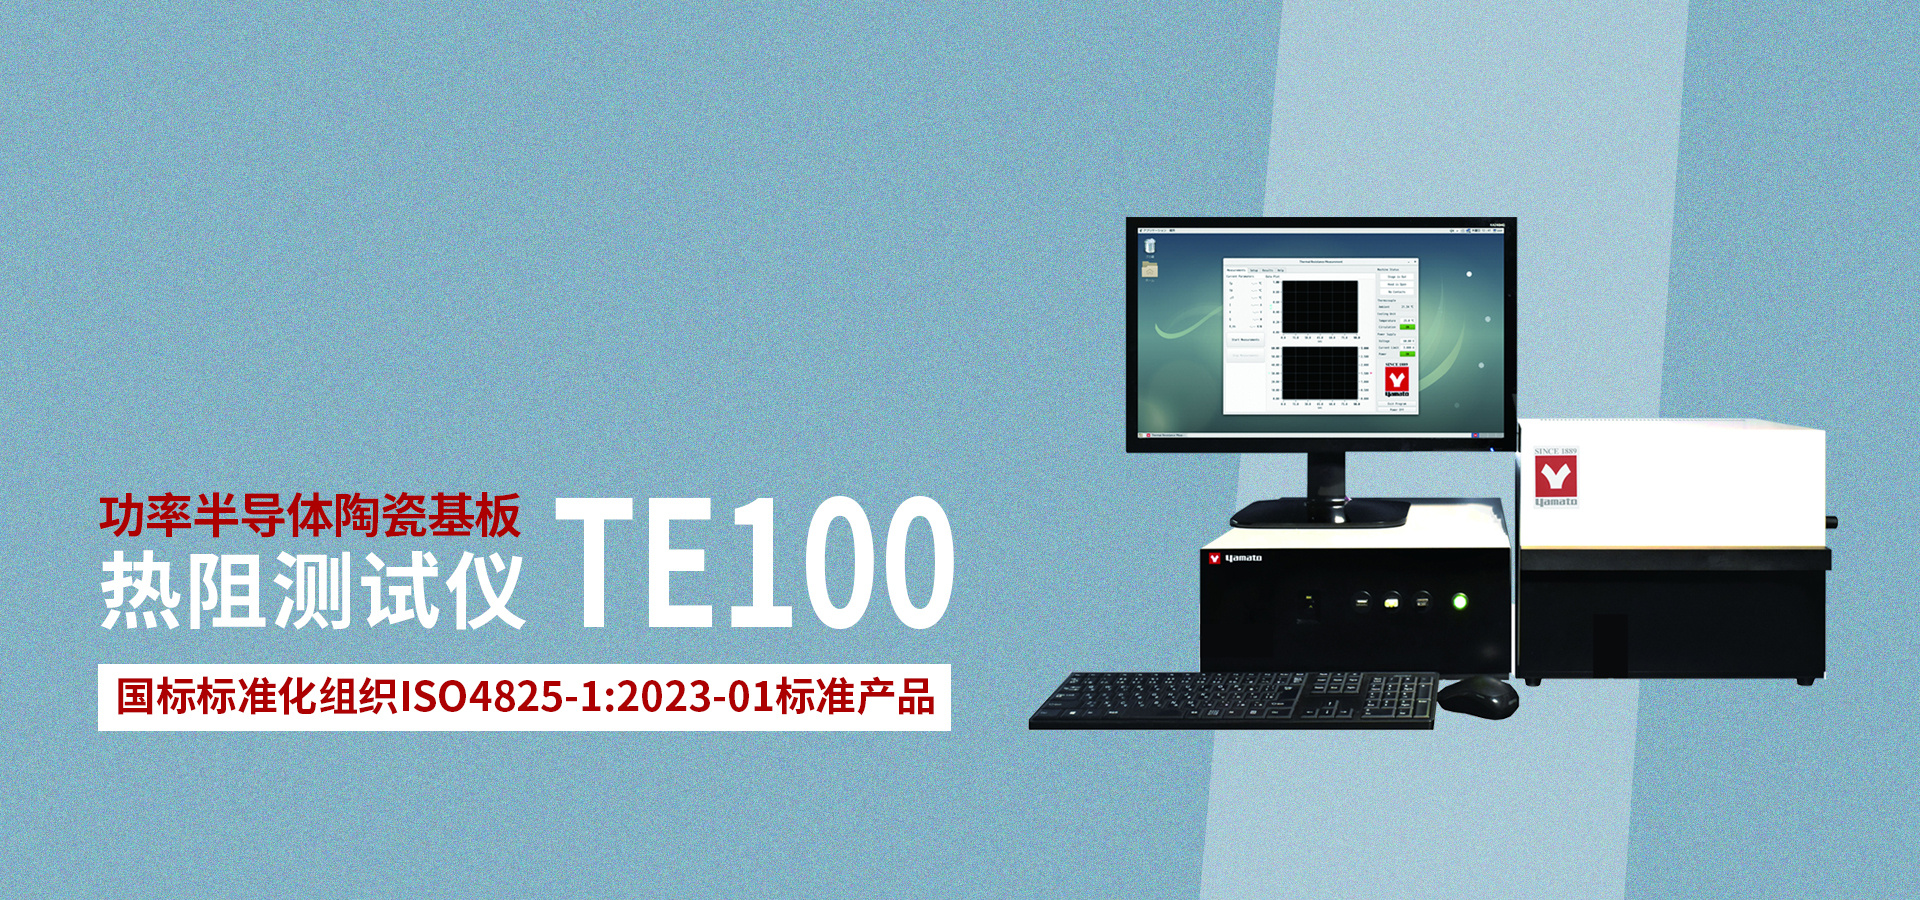 yamato TE100热特性评估设备产品资料可在展台下载